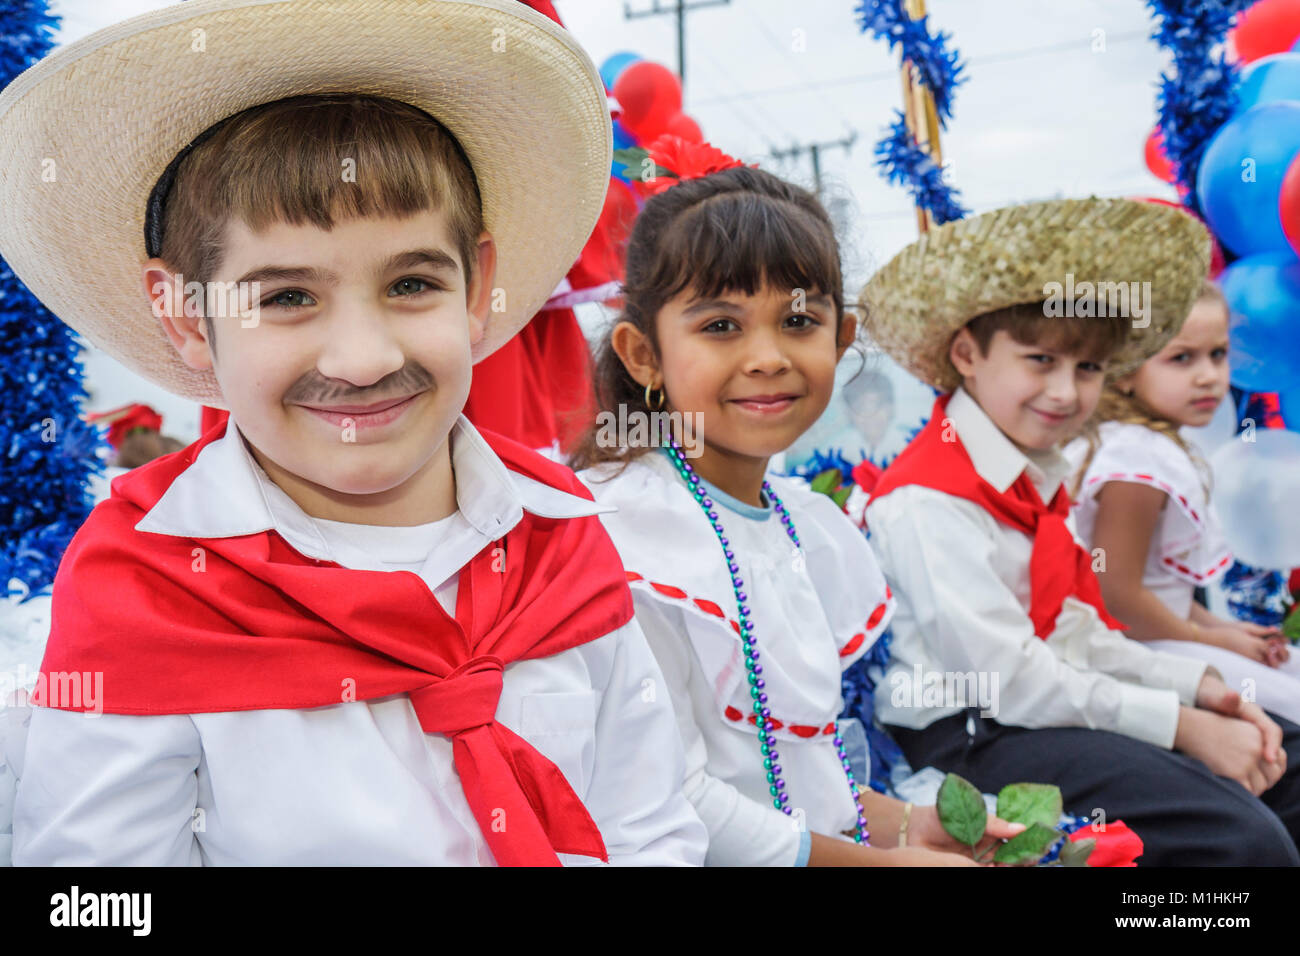 Florida,Hialeah,Jose Marti Parade,honoring Cuban poet,participant,Hispanic boy boys male girl,girls female kids children costume,straw hat,FL080120040 Stock Photo